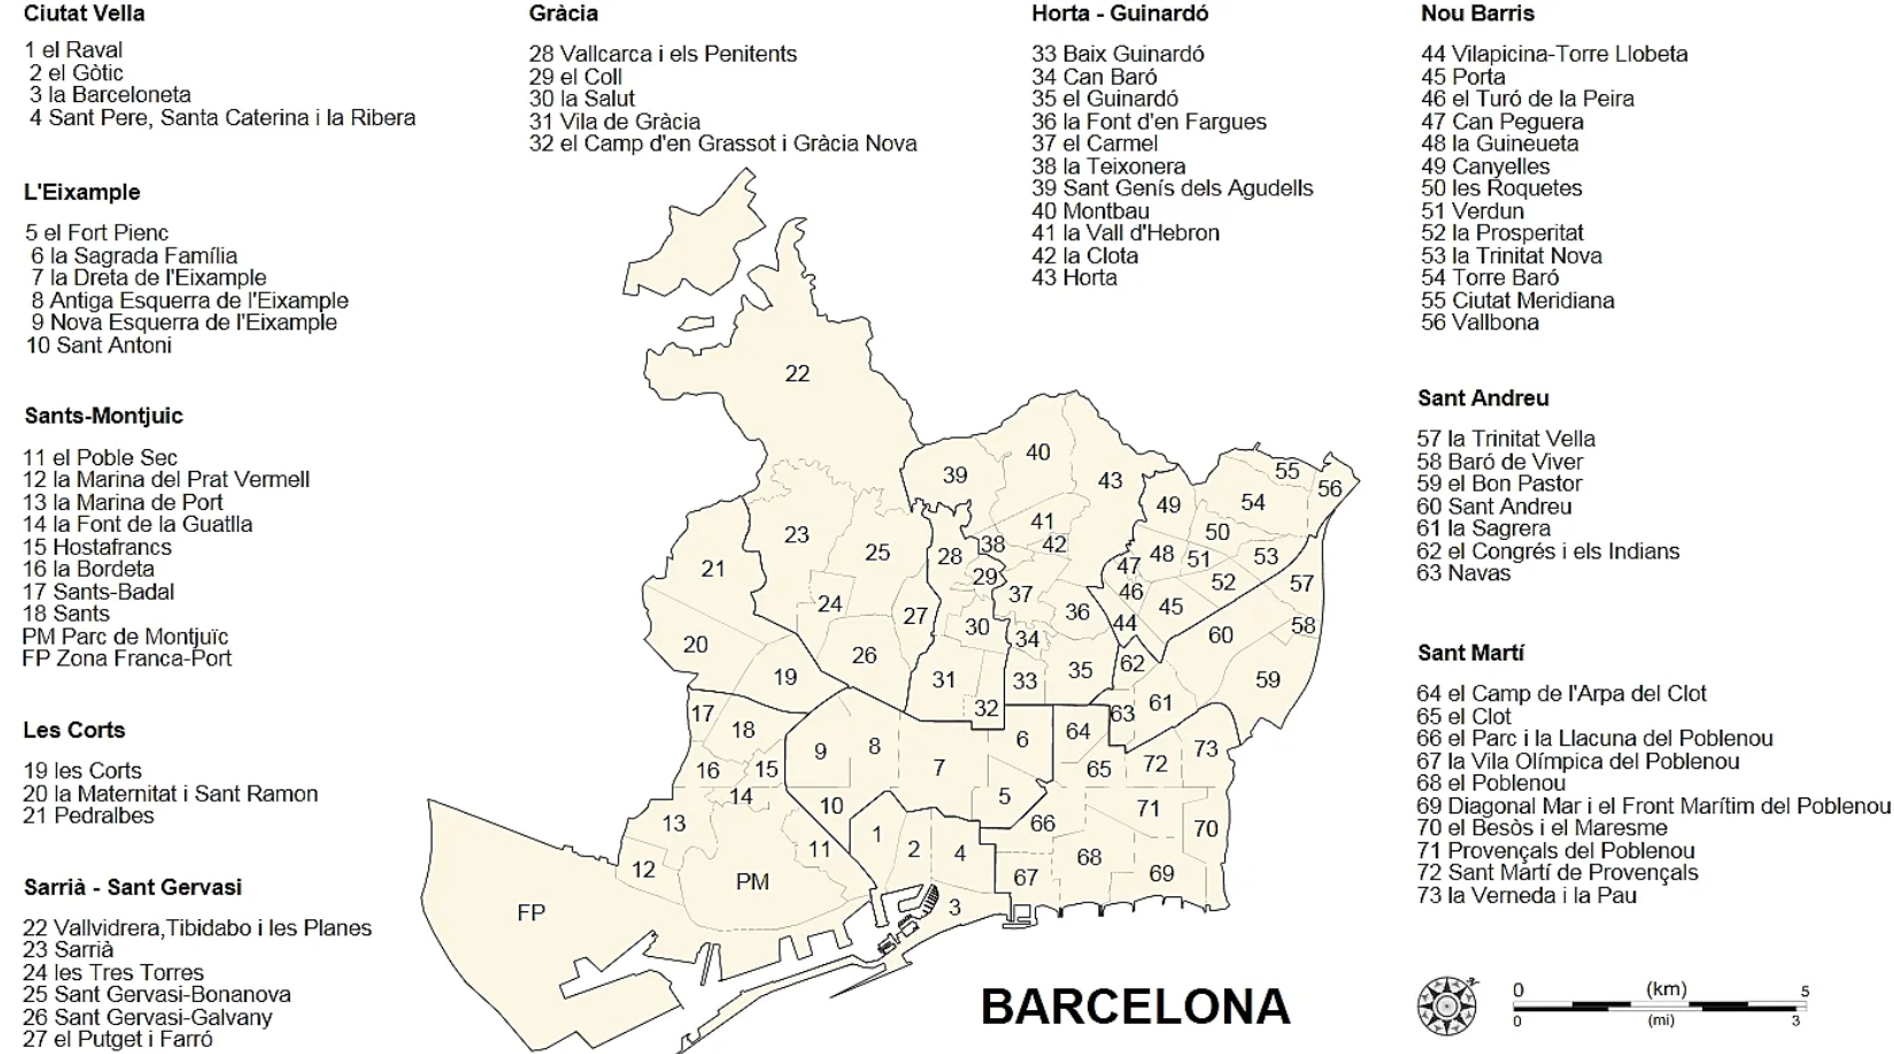 Fuente imagen: Barcelona Barris map.svg